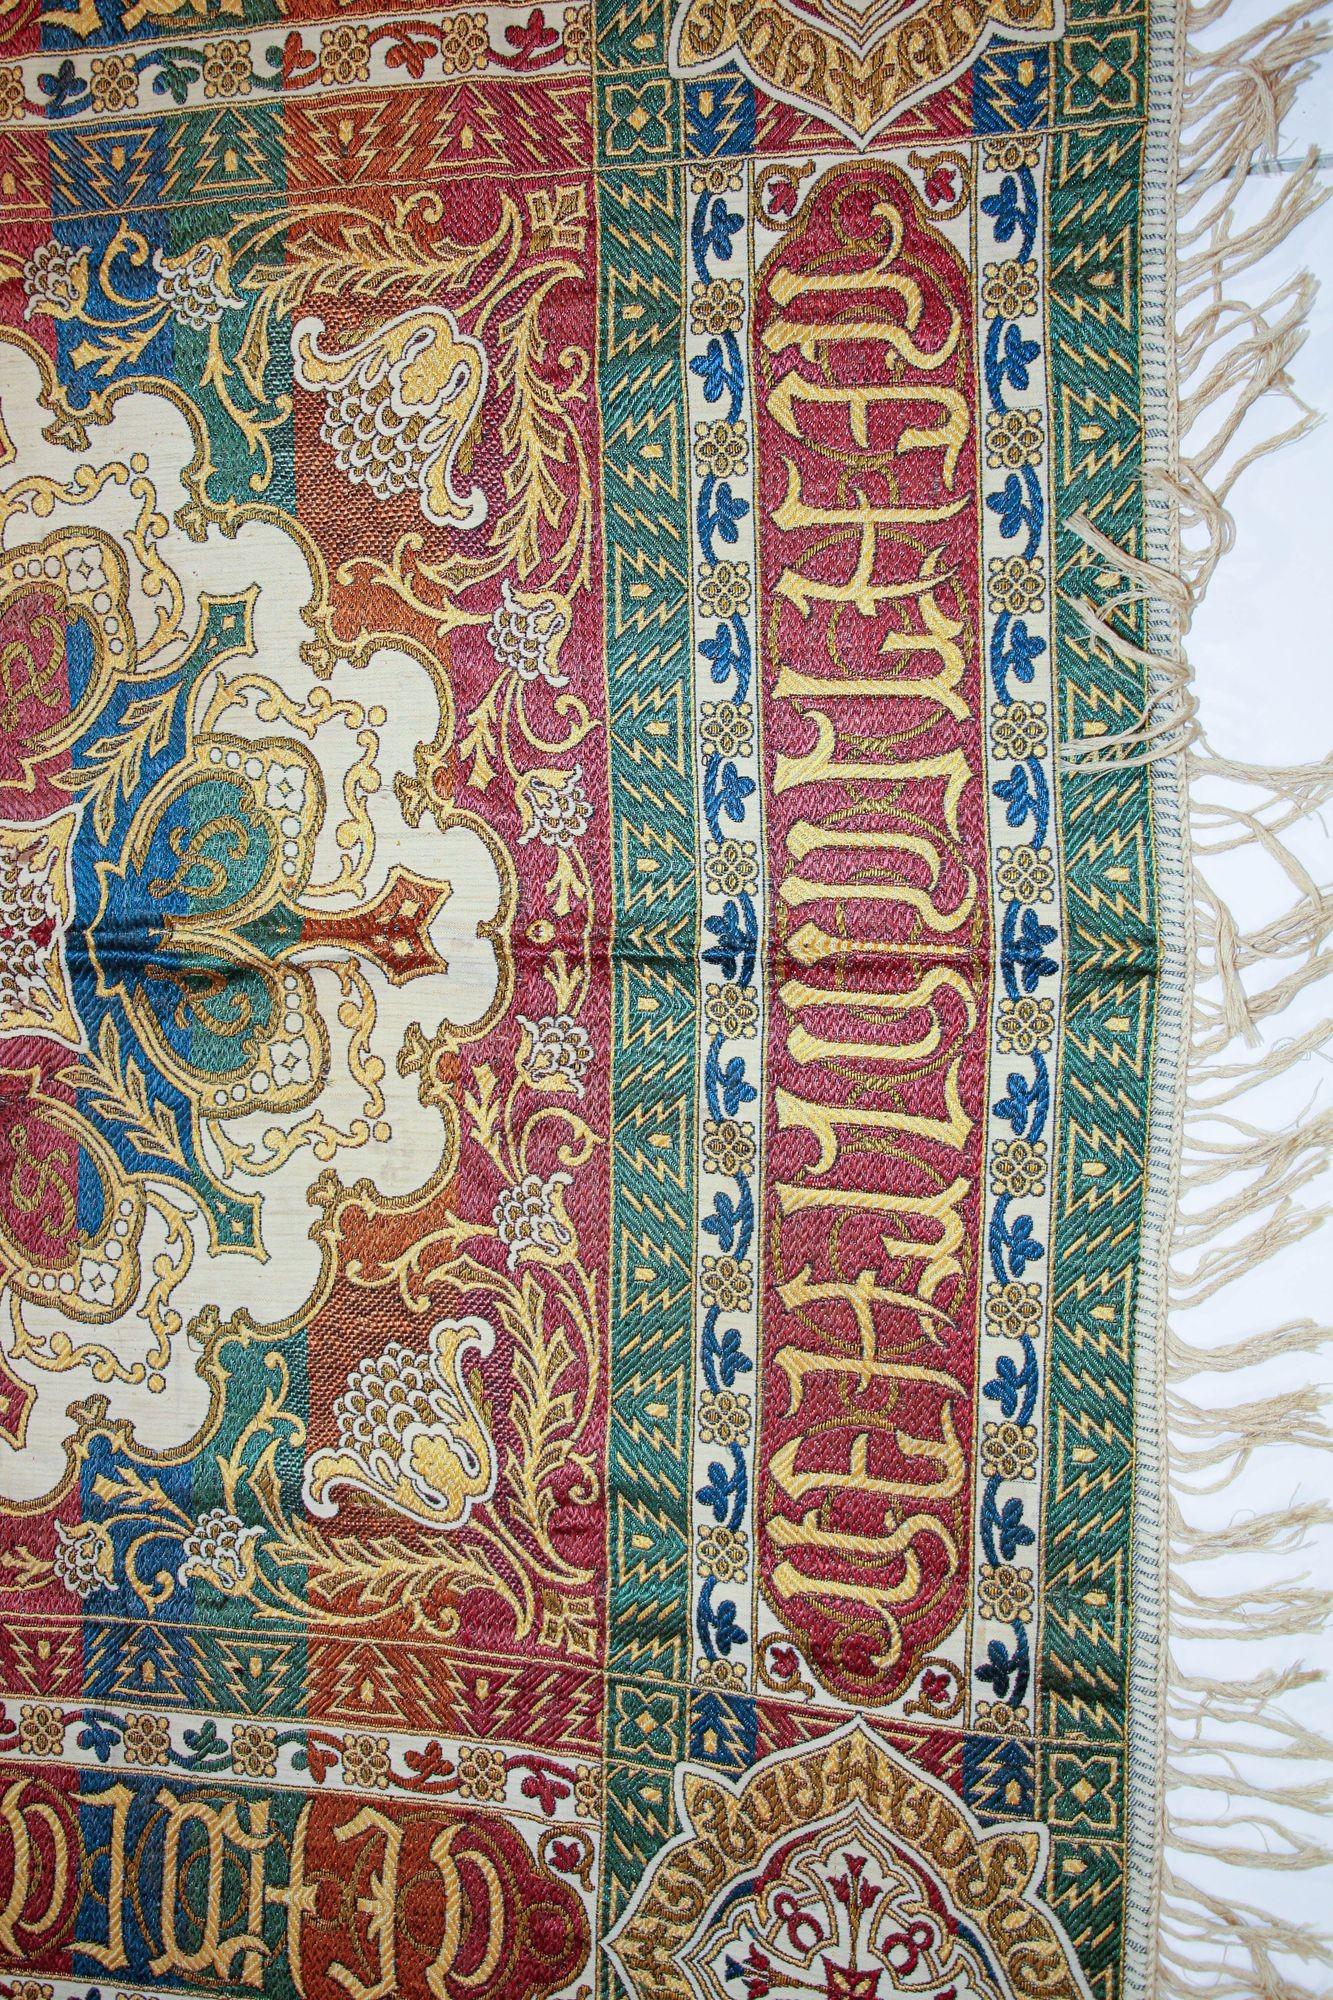 Cotton Antique Islamic Textile with Moorish Arabic Writing Granada Spain